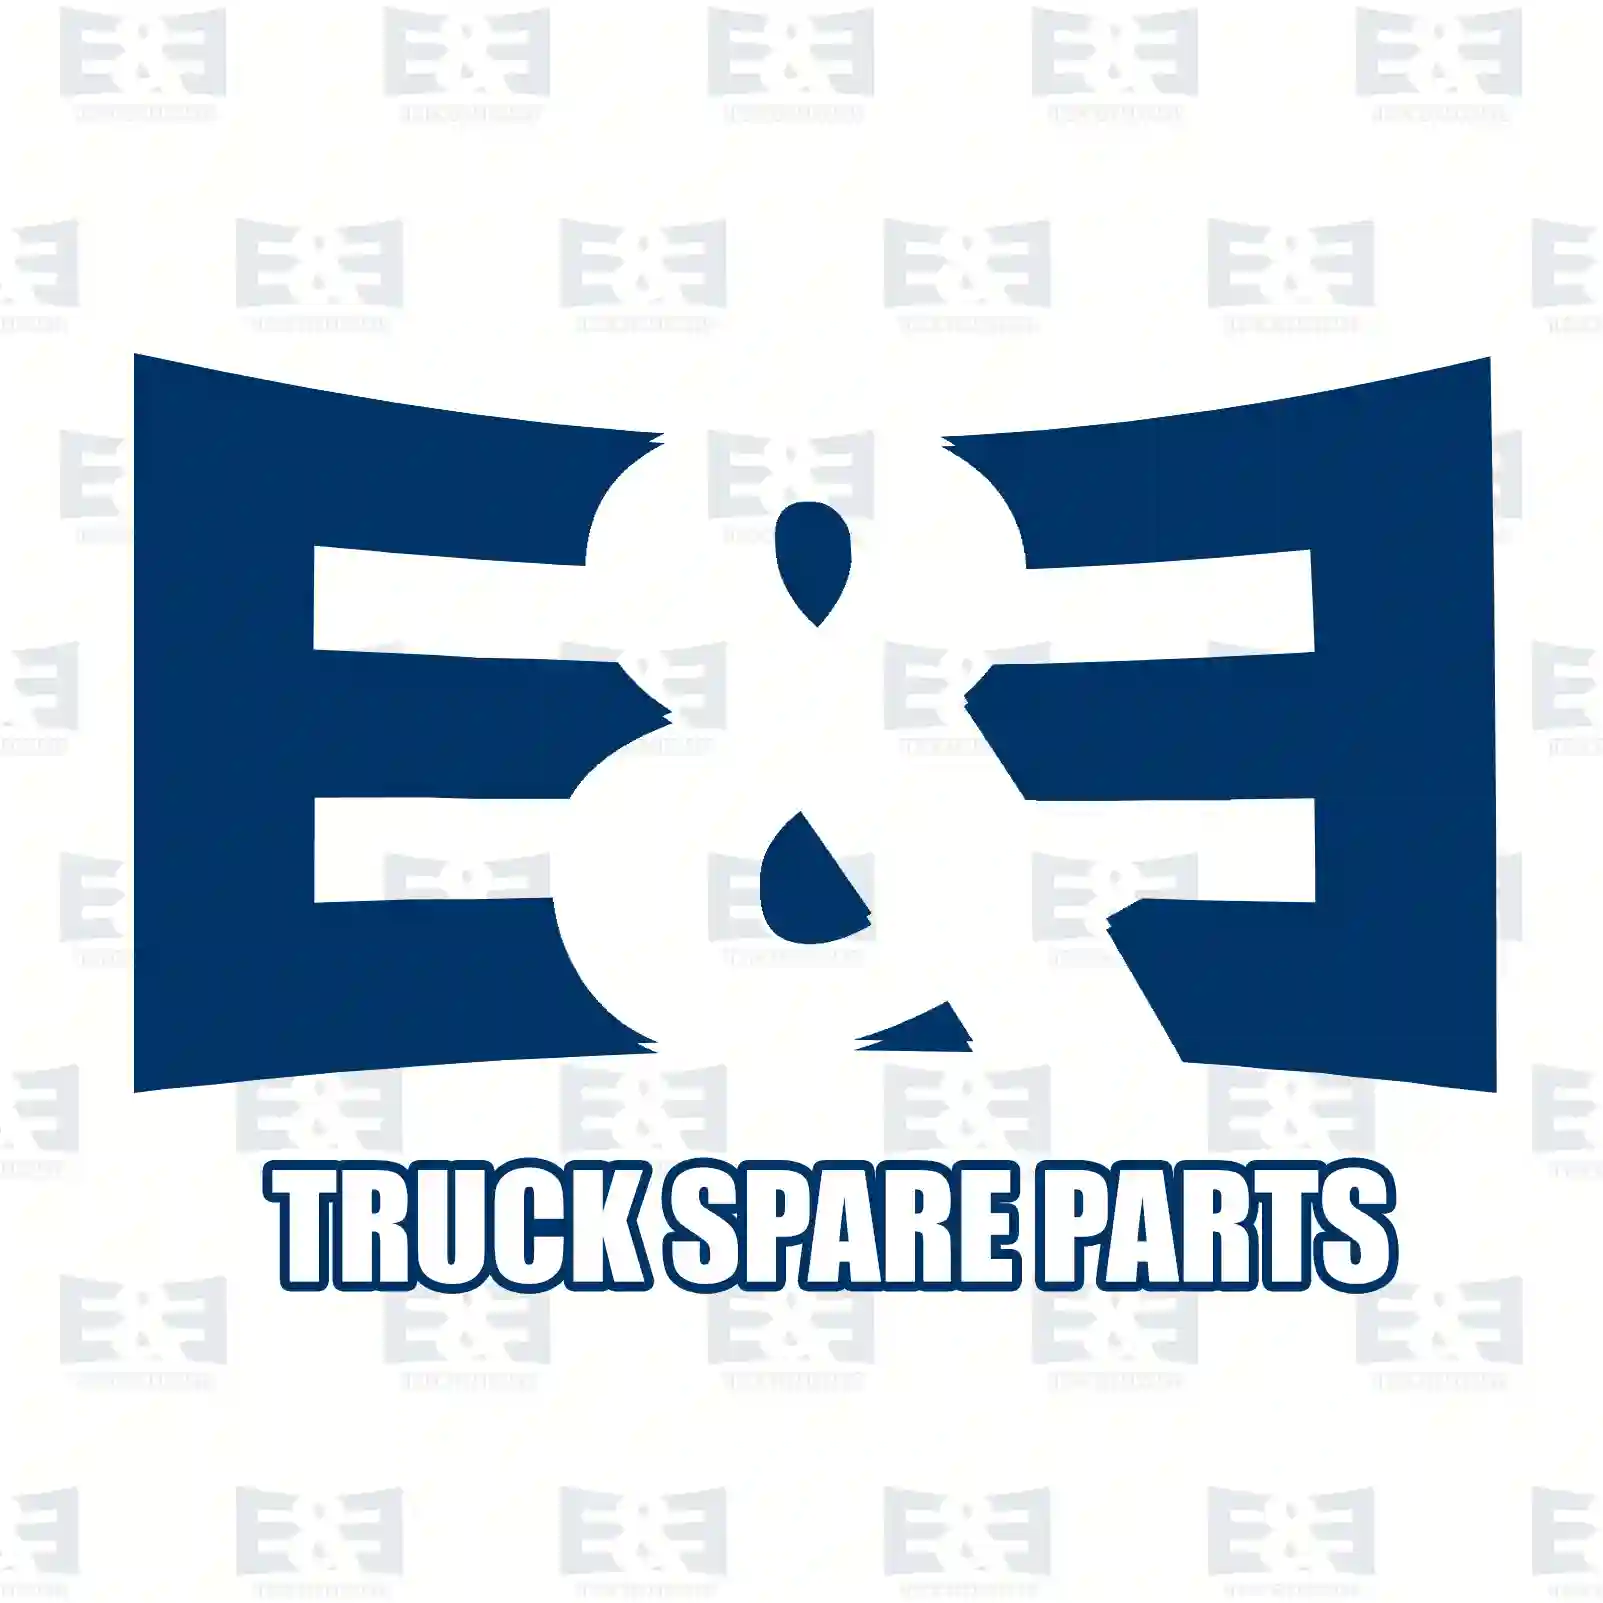 Spring brake cylinder, 2E2294262, 0544440010, 0544440020, 6609441, 6609442, 0074203624, 4454107230, 4454107630, 4454107730, 054998, 1000835, 1078347, 1097975, 1162544, 1255715, 50397006 ||  2E2294262 E&E Truck Spare Parts | Truck Spare Parts, Auotomotive Spare Parts Spring brake cylinder, 2E2294262, 0544440010, 0544440020, 6609441, 6609442, 0074203624, 4454107230, 4454107630, 4454107730, 054998, 1000835, 1078347, 1097975, 1162544, 1255715, 50397006 ||  2E2294262 E&E Truck Spare Parts | Truck Spare Parts, Auotomotive Spare Parts